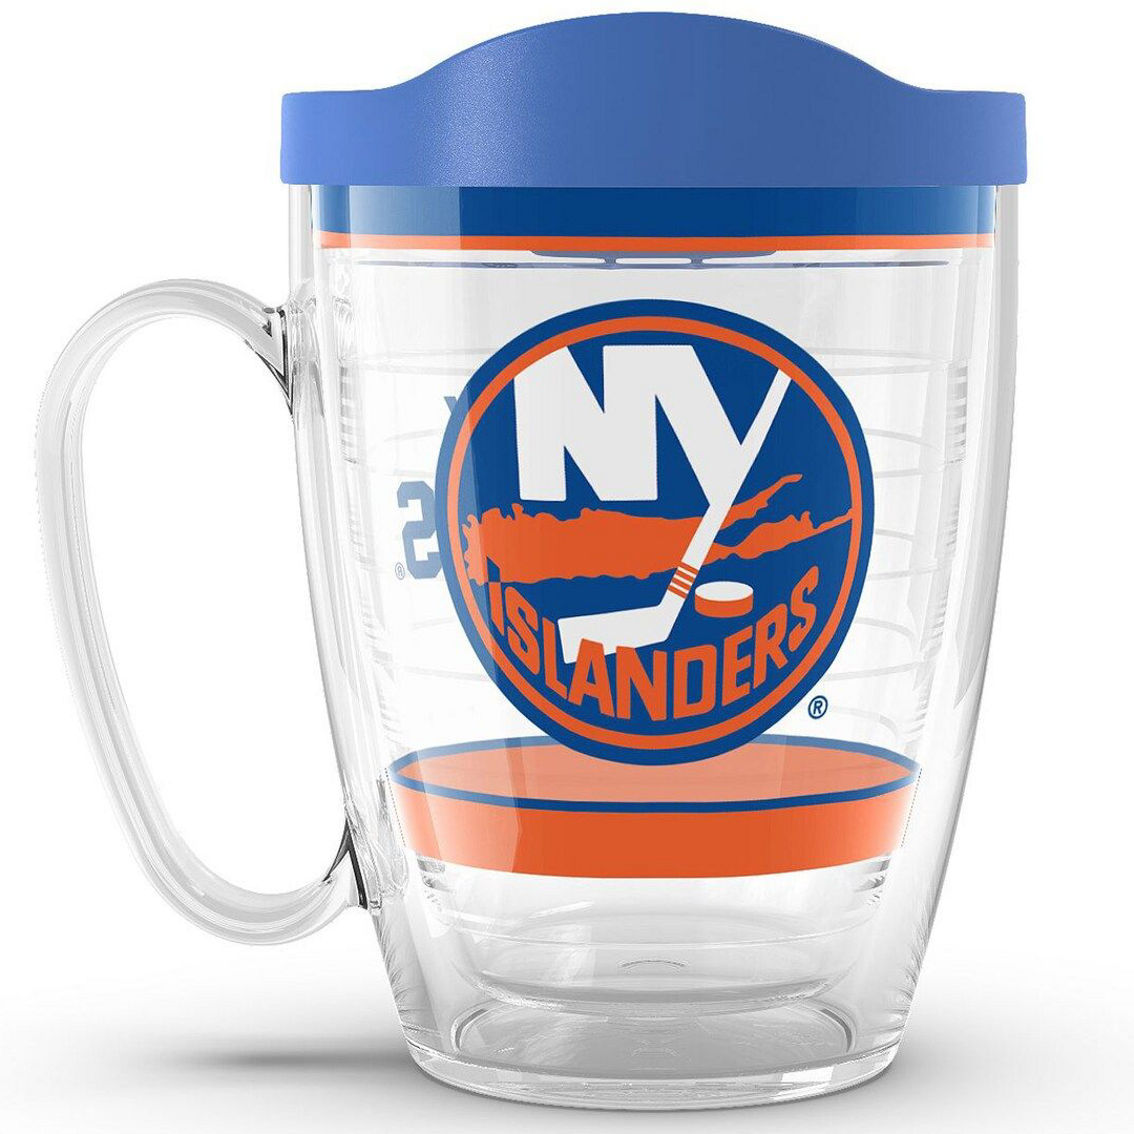 Tervis New York Islanders 16oz. Tradition Classic Mug - Image 2 of 2